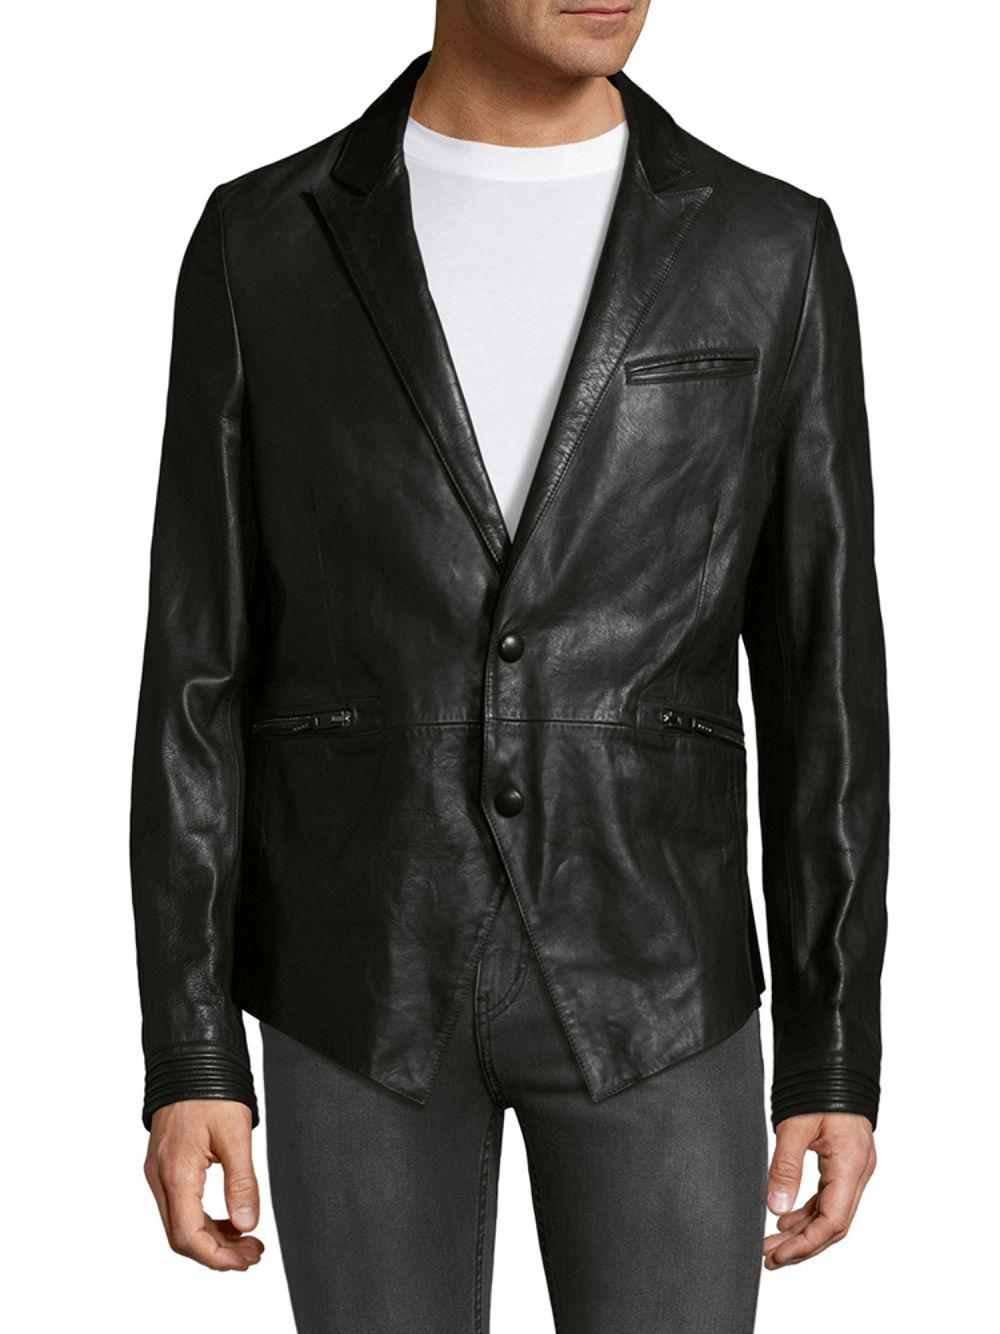 Roberto Cavalli Peak Lapel Leather Jacket in Black for Men - Lyst